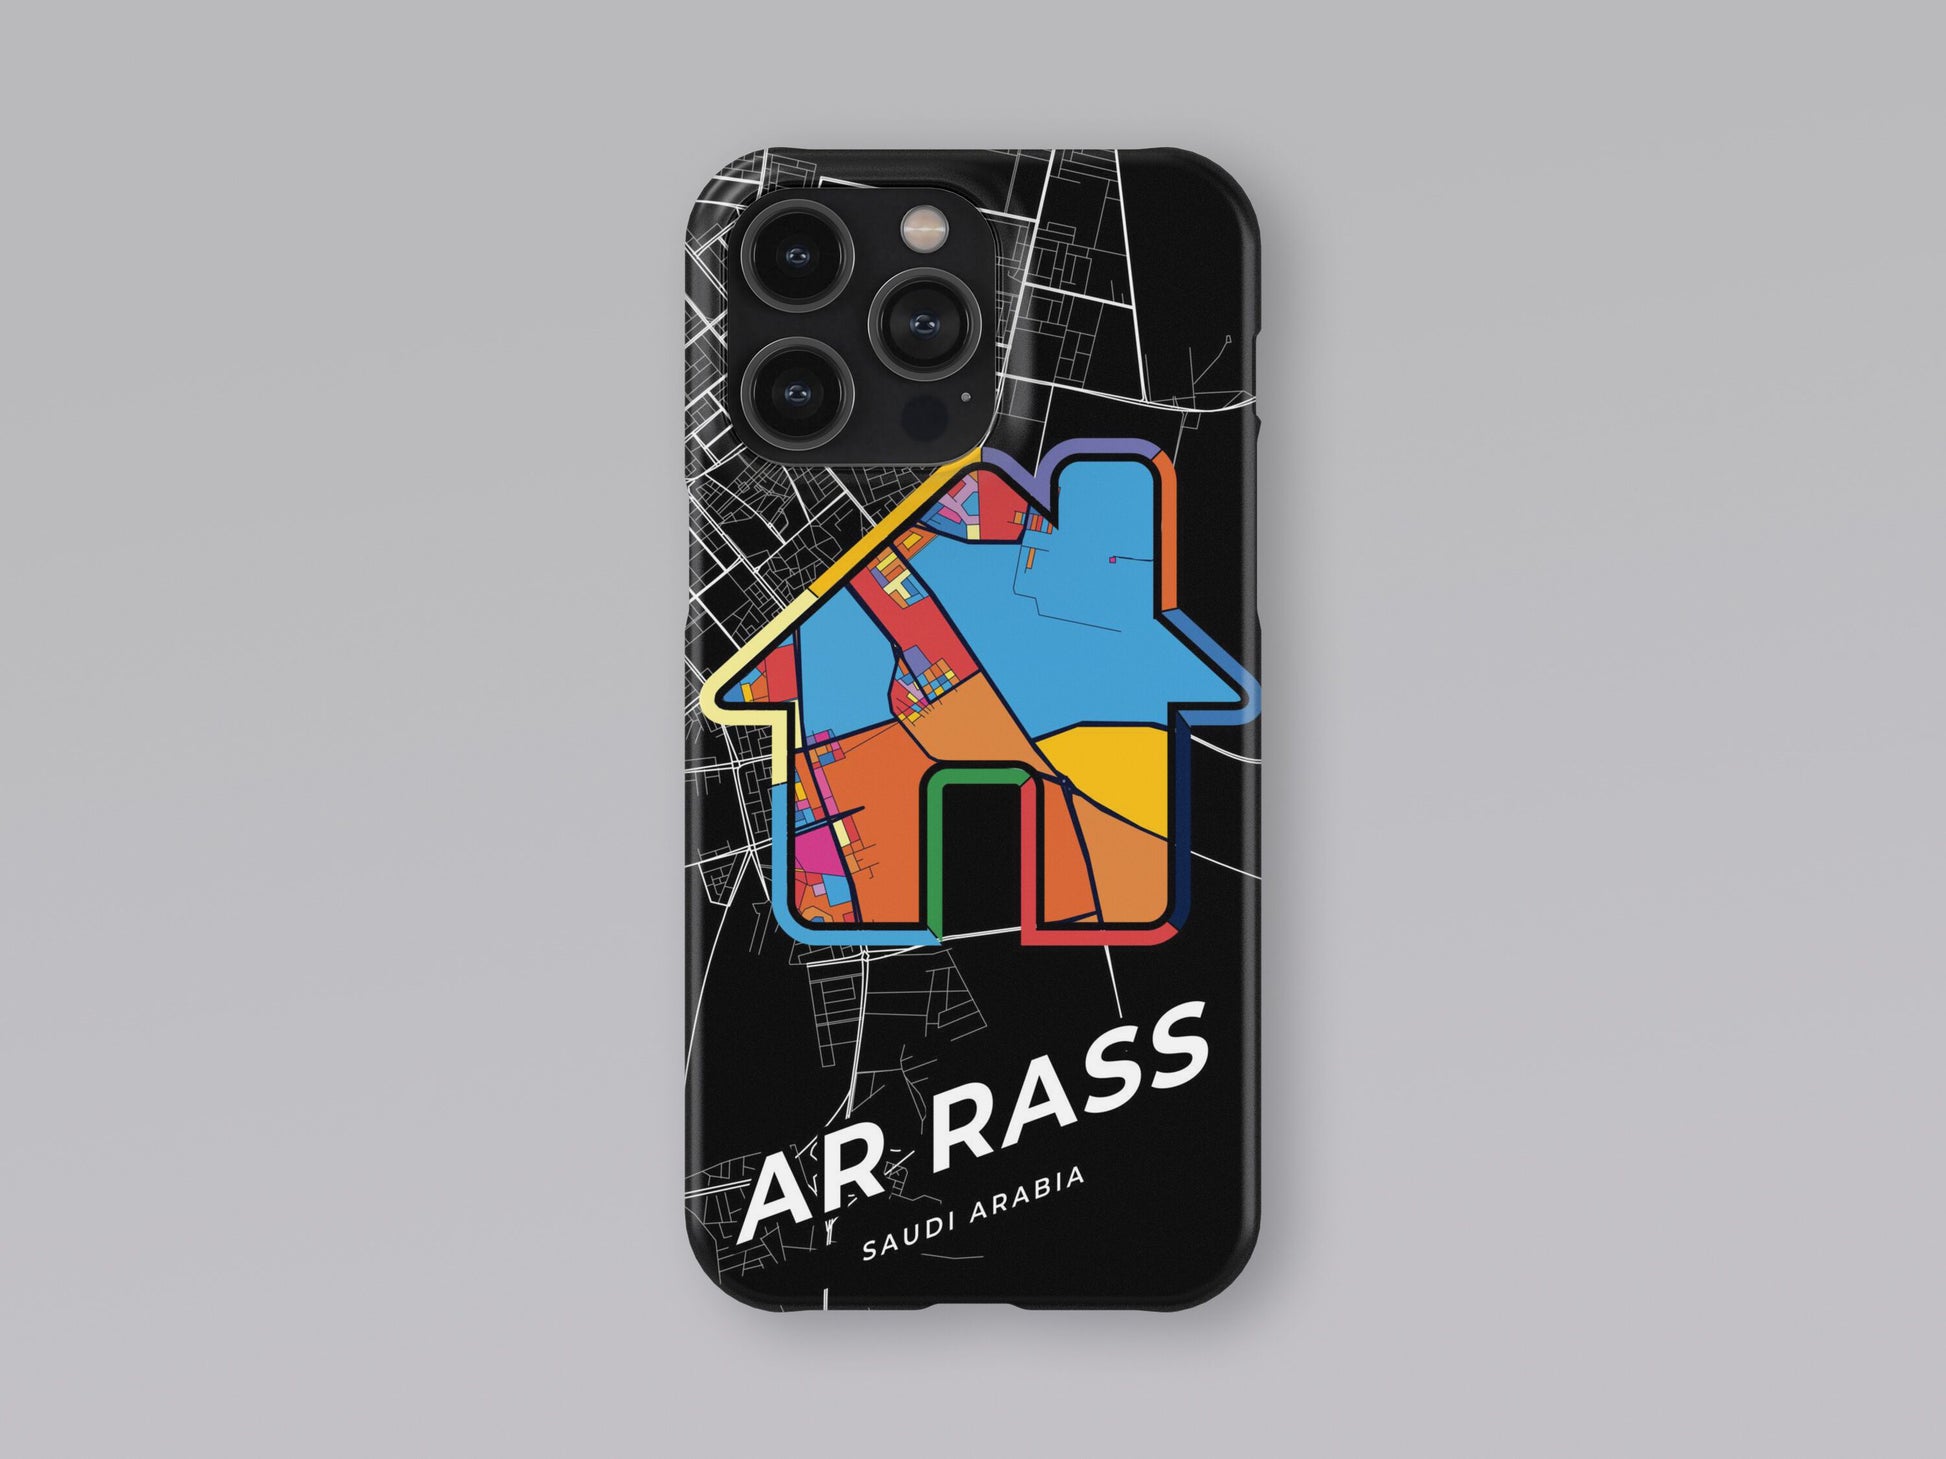 Ar Rass Saudi Arabia slim phone case with colorful icon. Birthday, wedding or housewarming gift. Couple match cases. 3